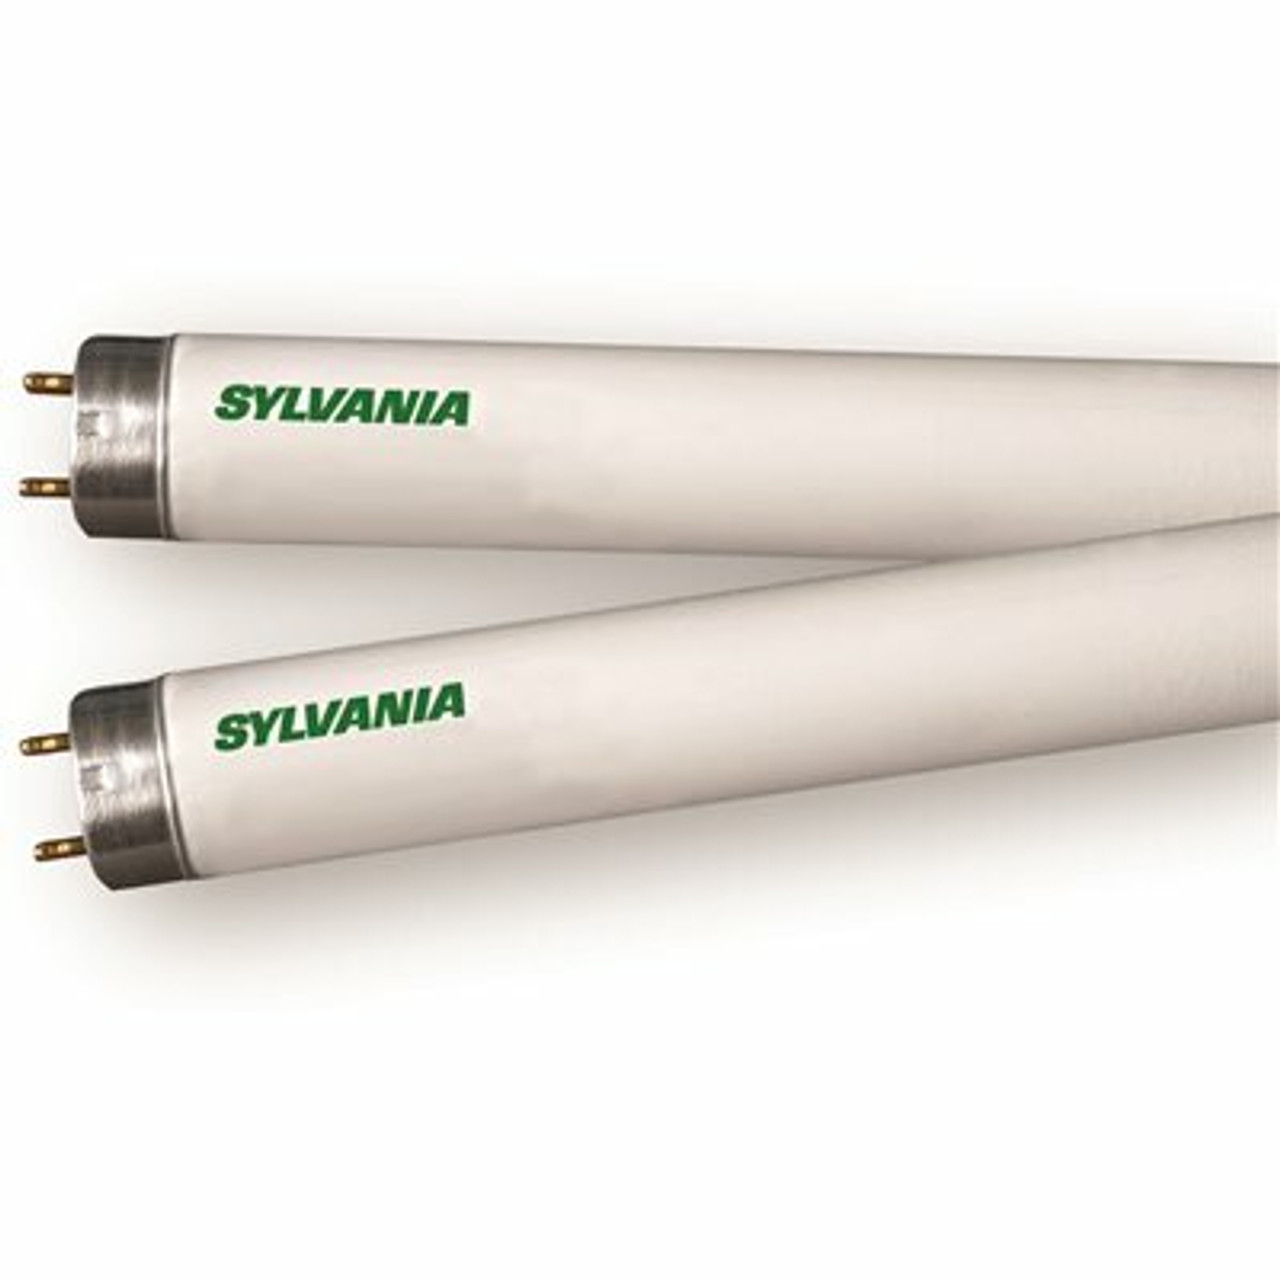 Sylvania 28-Watt Linear T8 Fluorescent Light Bulb Cool White